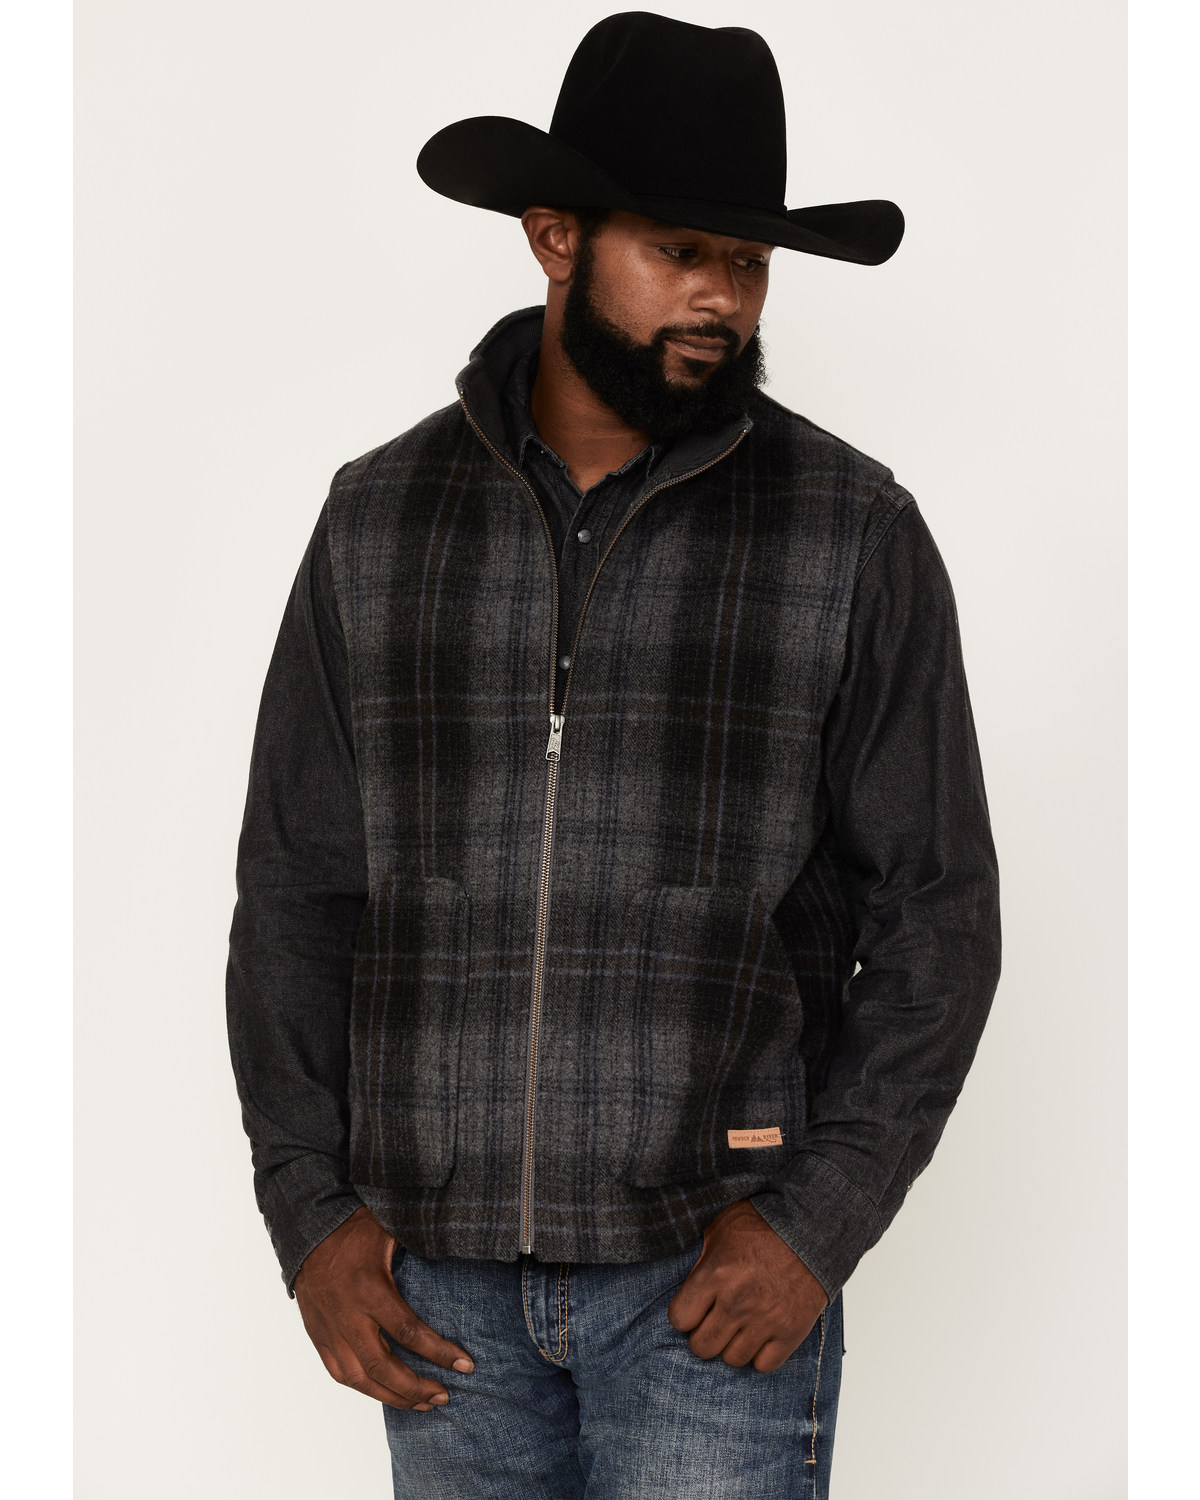 Powder River Outfitters Men's Large Plaid Print Wool Vest